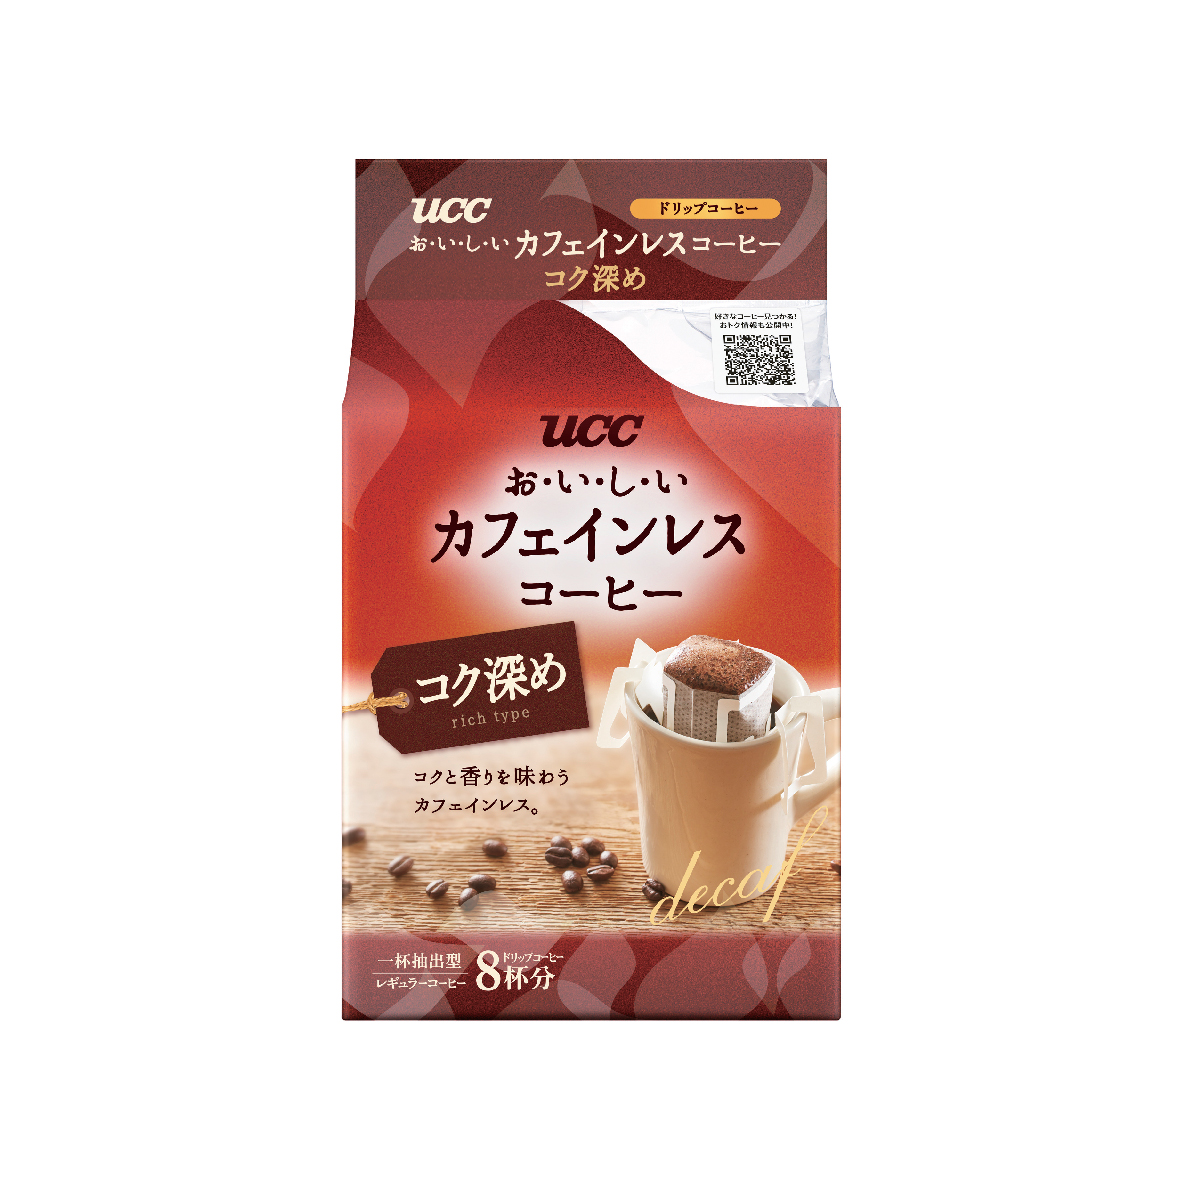 UCC Decaffeinated Rich Drip Coffee